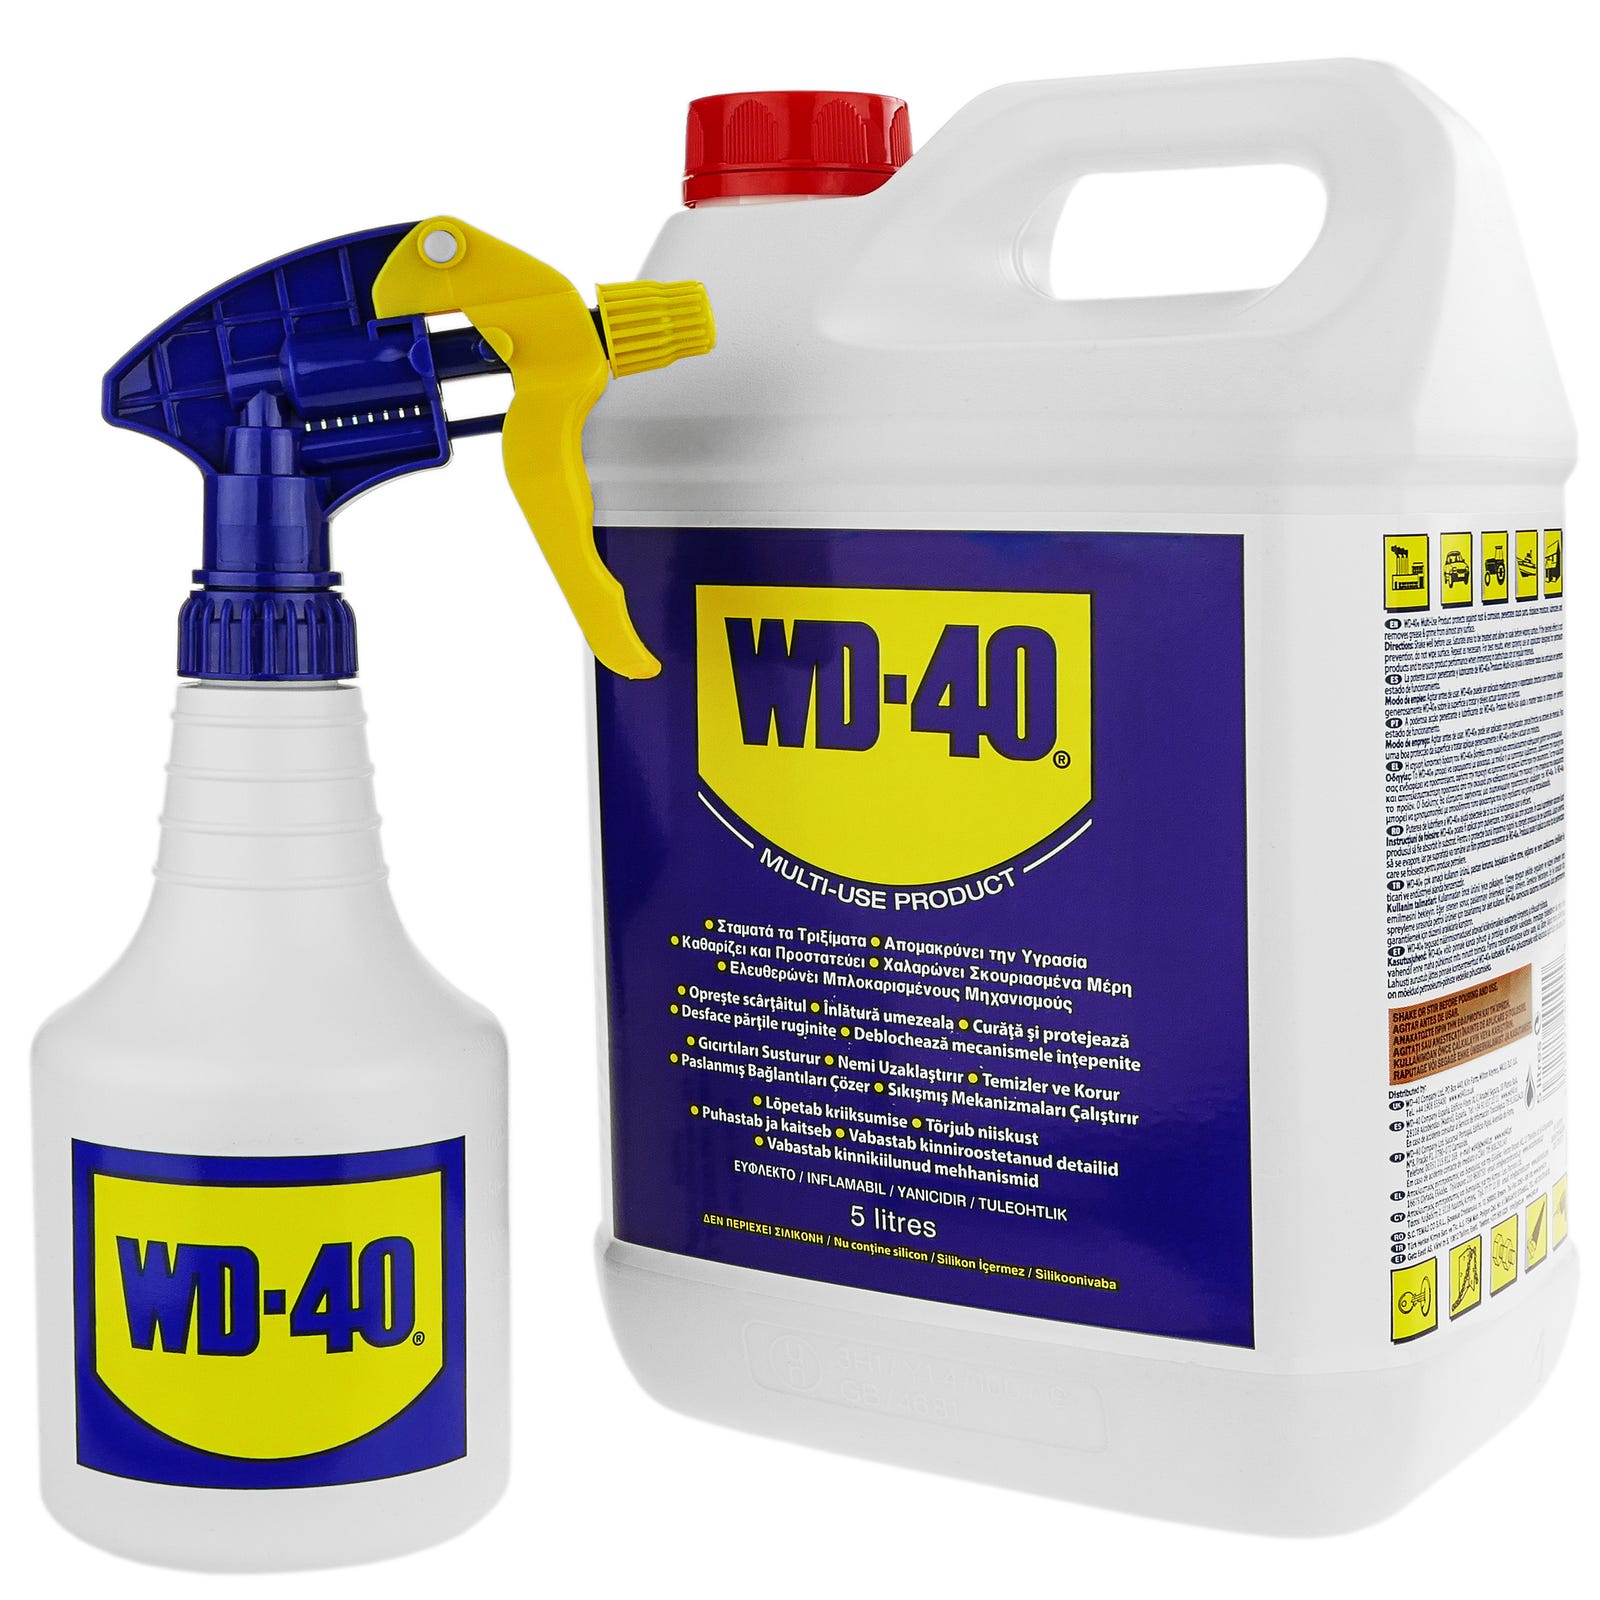 Multiusos WD-40 garrafa 5L + pulverizador (gratis)